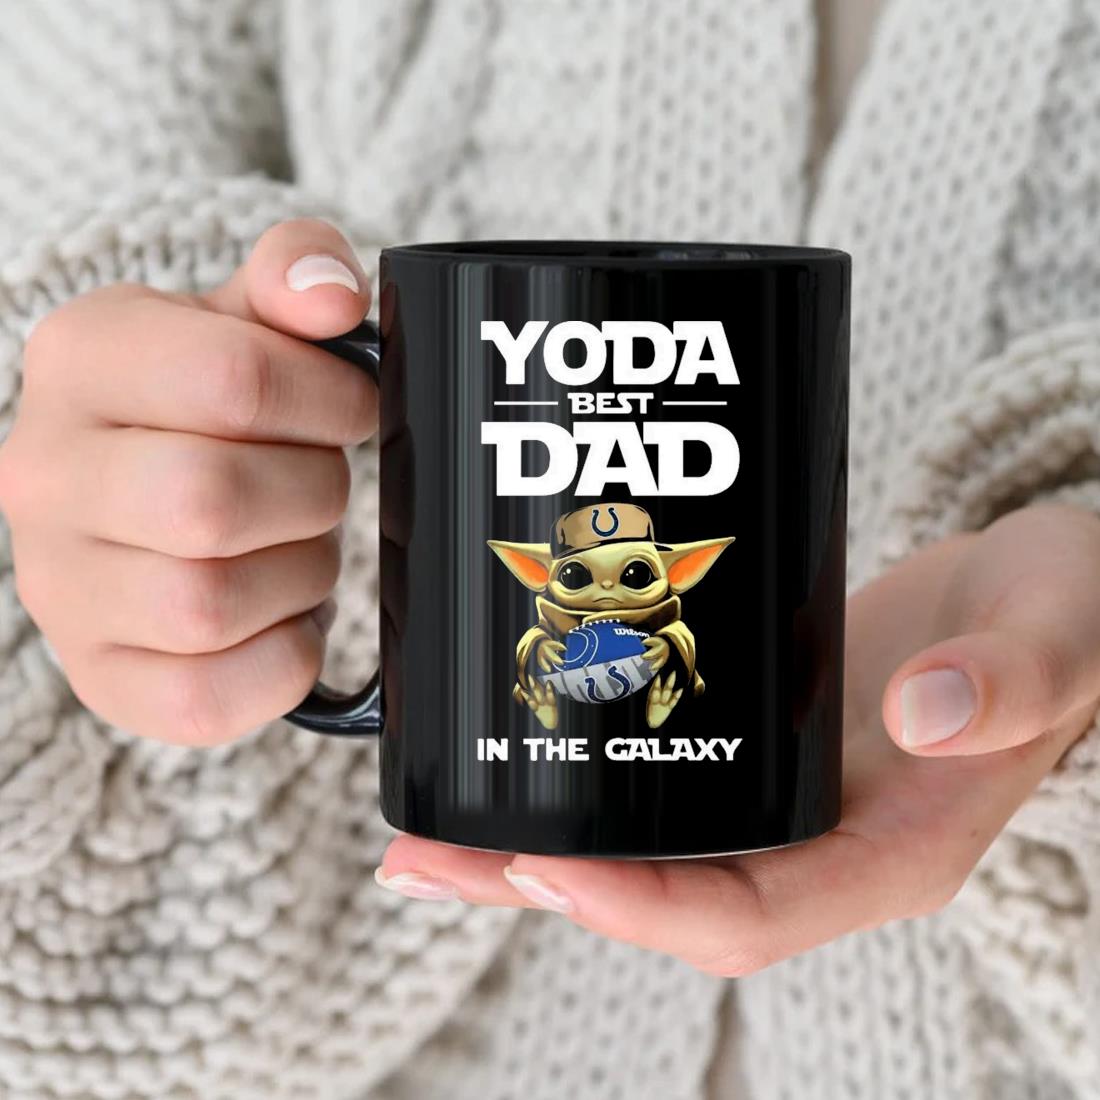 Yoda Best Dad In The Galaxy Indianapolis Colts Football Nfl Mug